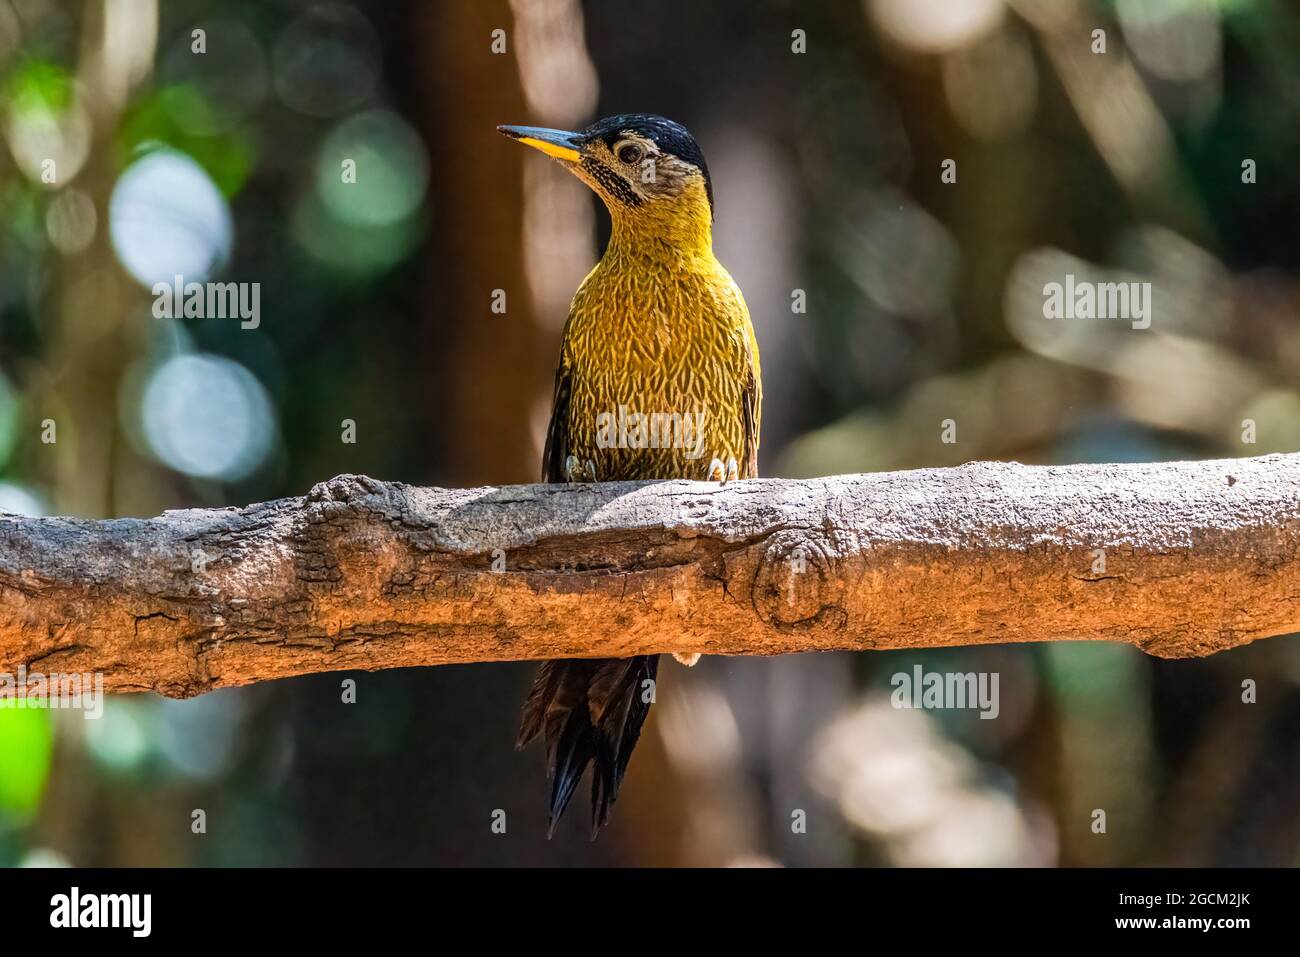 Common flameback, beautiful bird woodpecker in nature Stock Photo